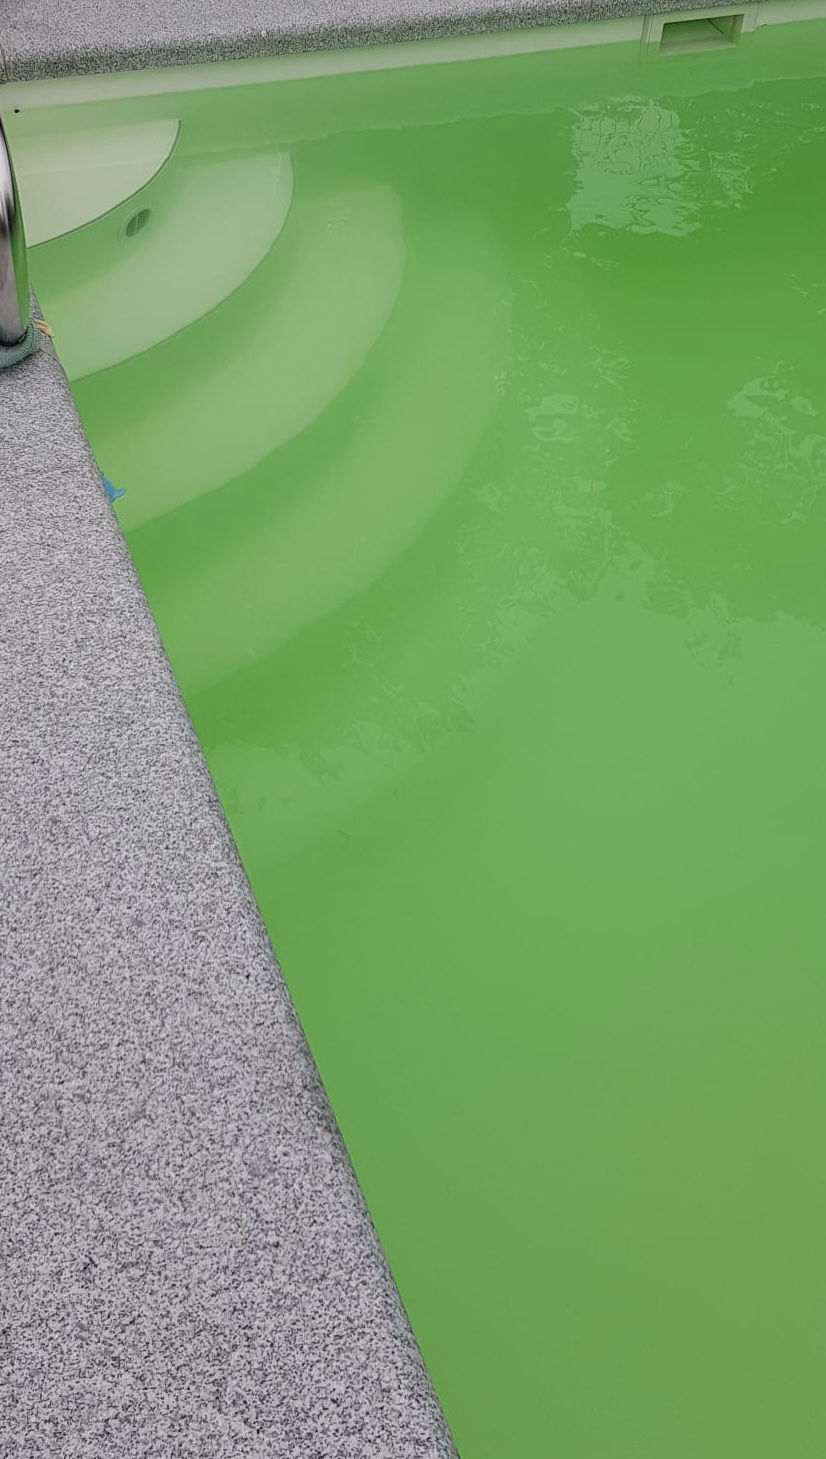 Eckschlager GmbH, Algen, Kampf gegen Algen, grünes Wasser, trübes Wasser, Algenbefall